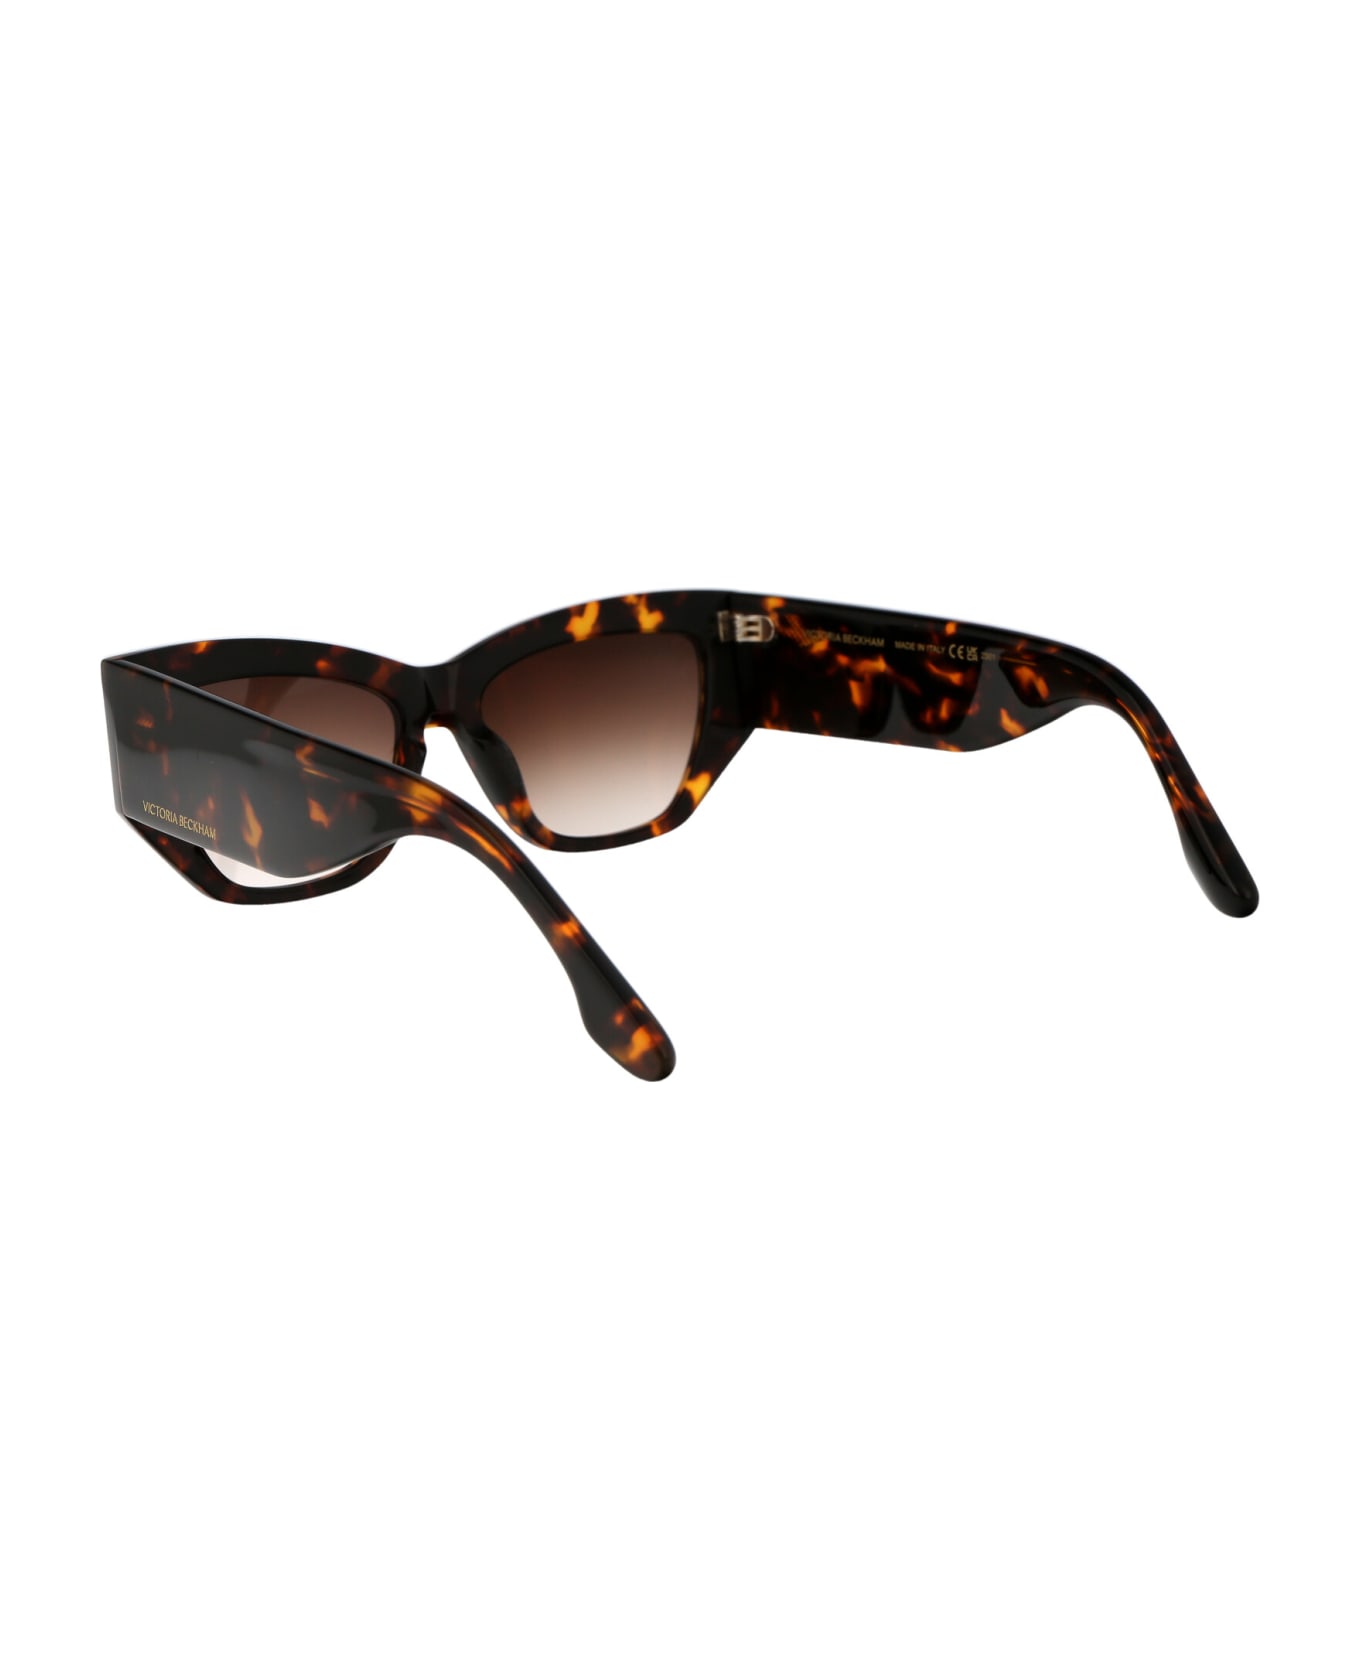 Victoria Beckham Vb645s Sunglasses - 234 DARK HAVANA